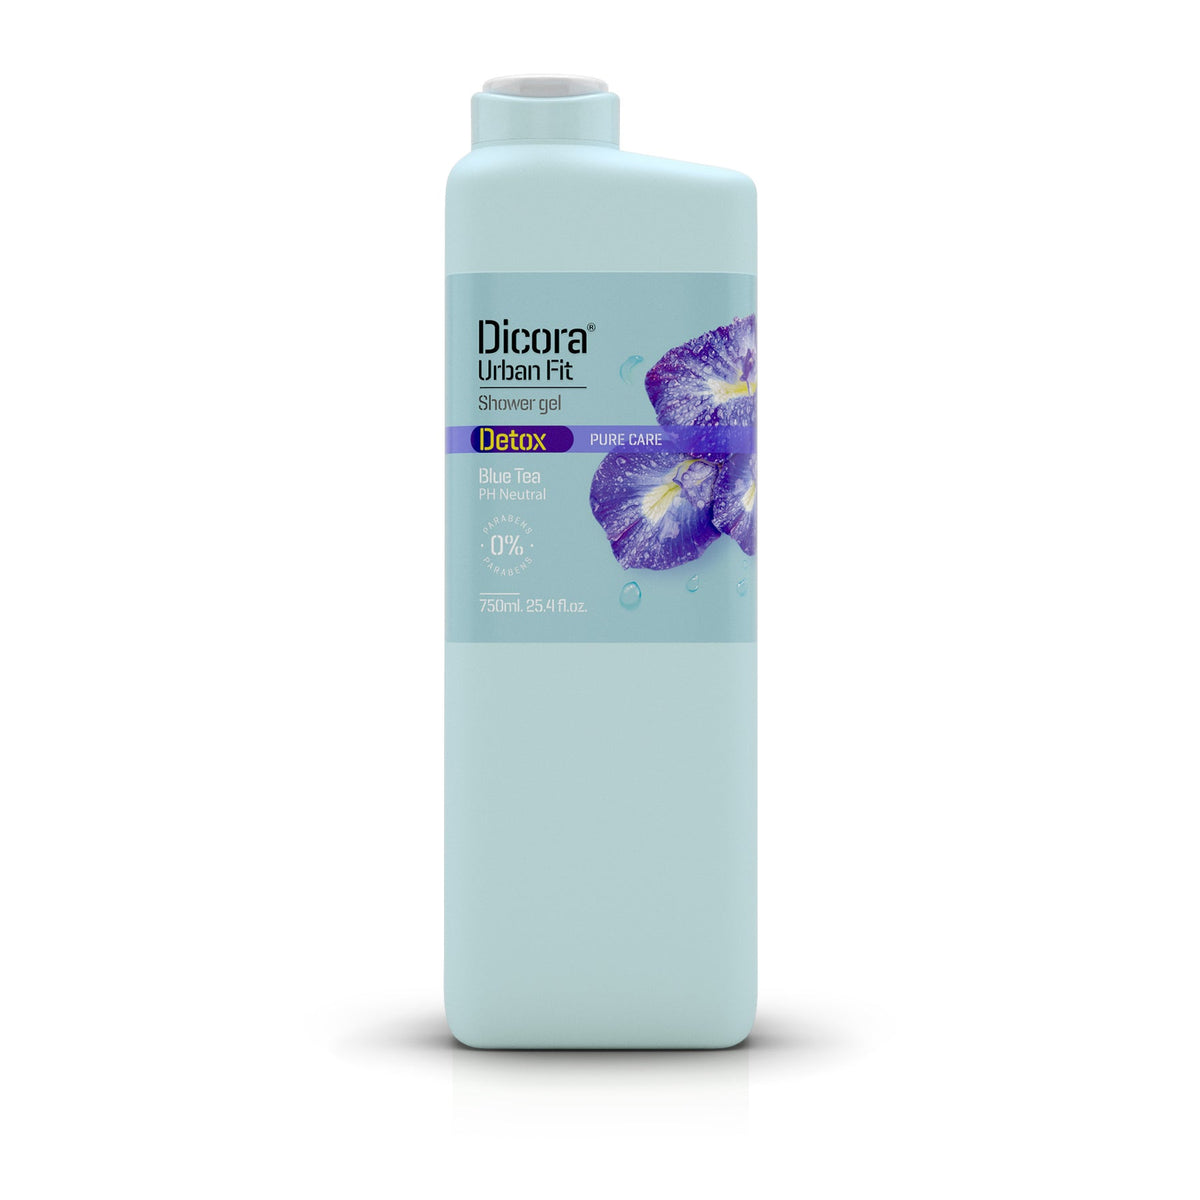 Dicora Urban Fit Shower Gel Detox Blue Tea - (750 ml) Dicora Urban Fit